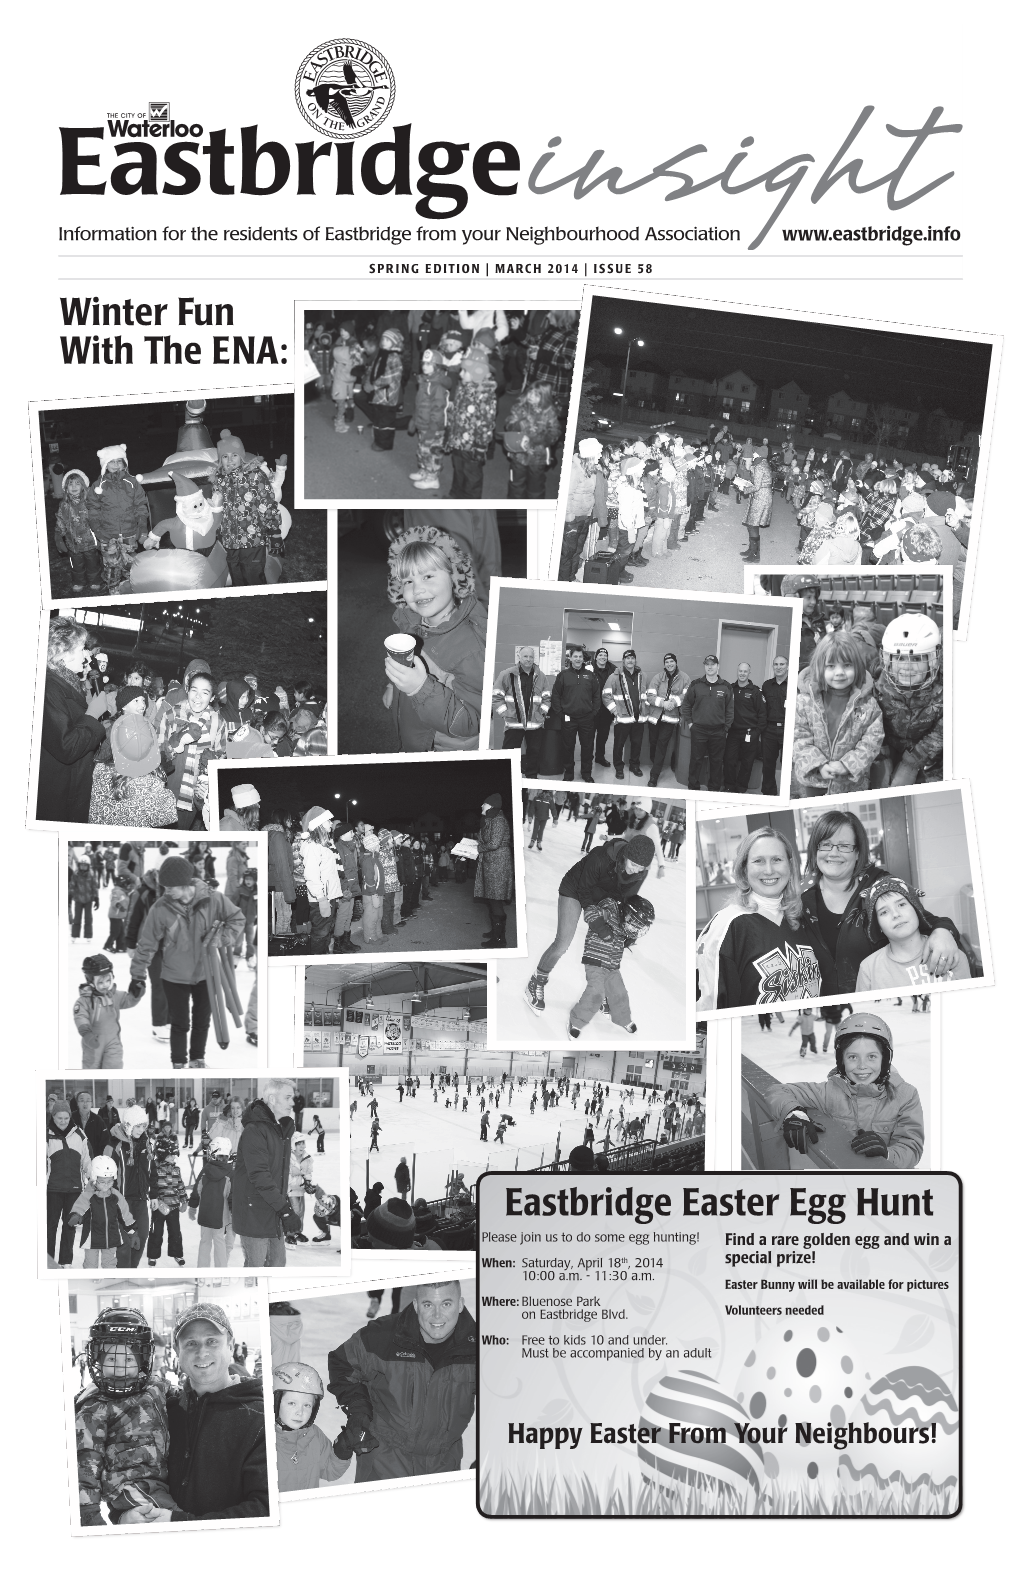 Winter Fun with the ENA: Eastbridge Easter Egg Hunt